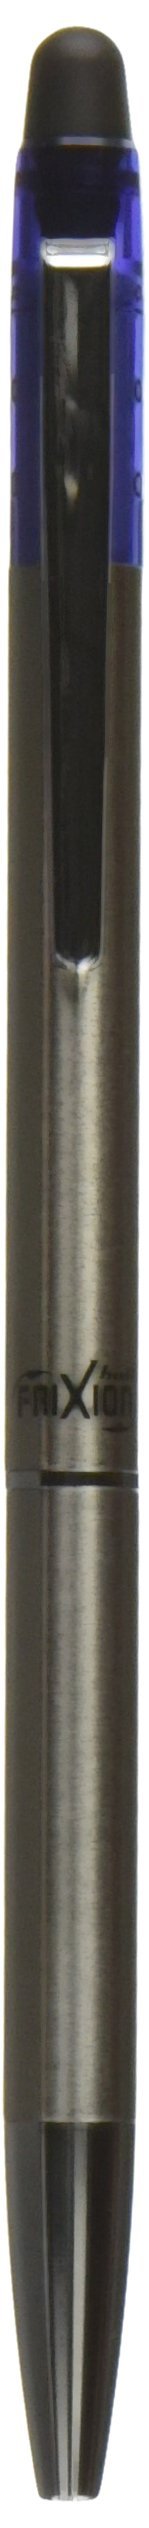 Pilot FRIXION BALL Slim Biz 0.38mm erasable gel ink pen LFBKS-1SUF-L Blue body_1